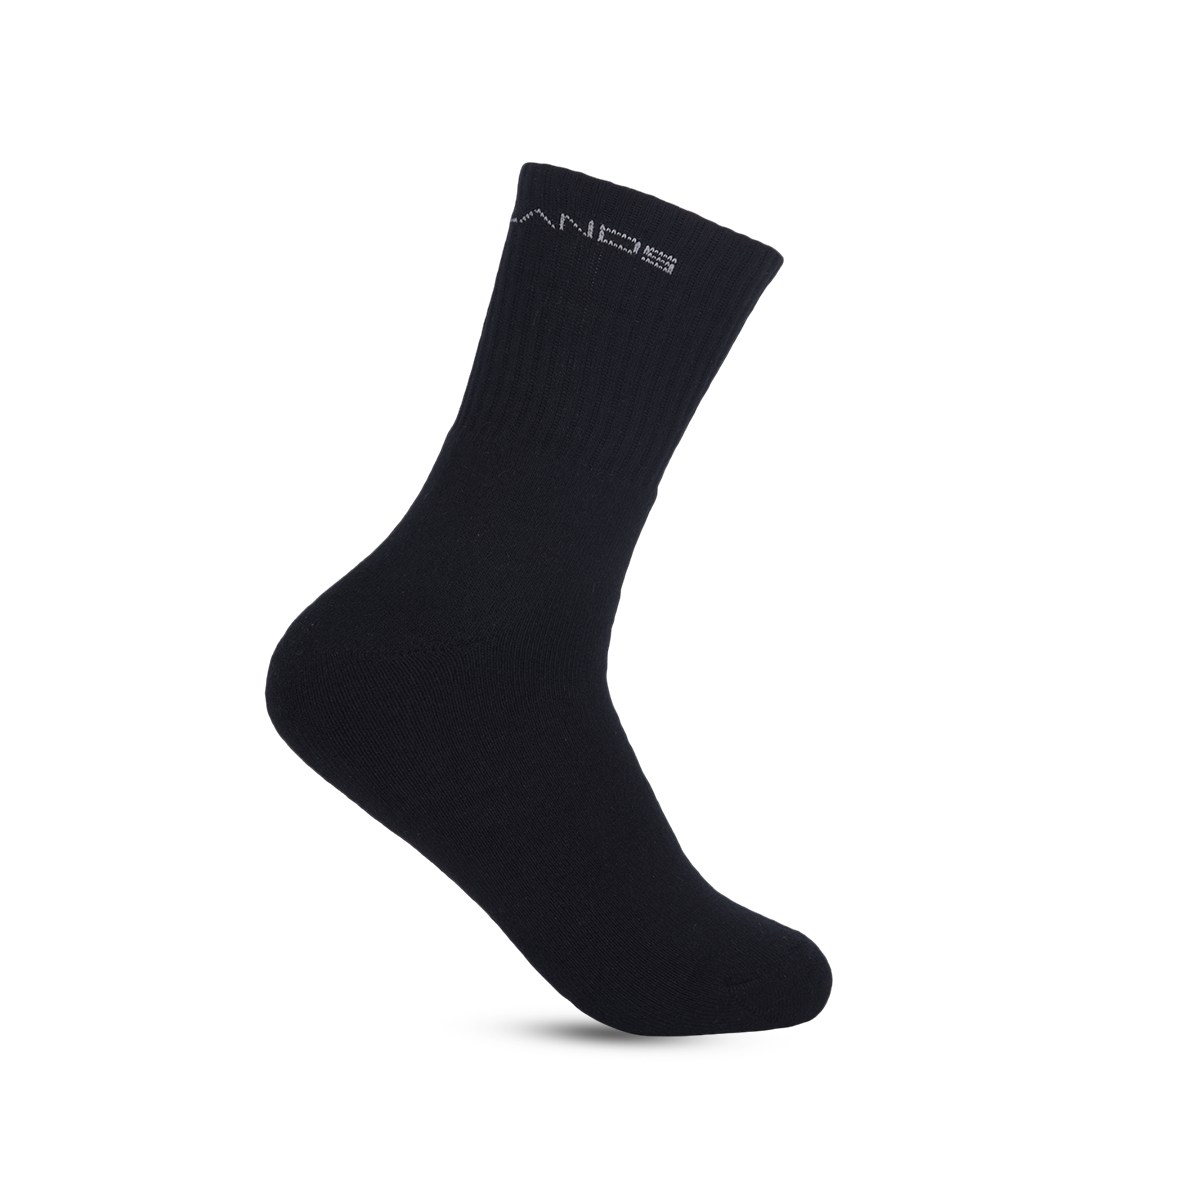 QUADRA Black Crew Socks (Pack of 3) for Everyday Comfort